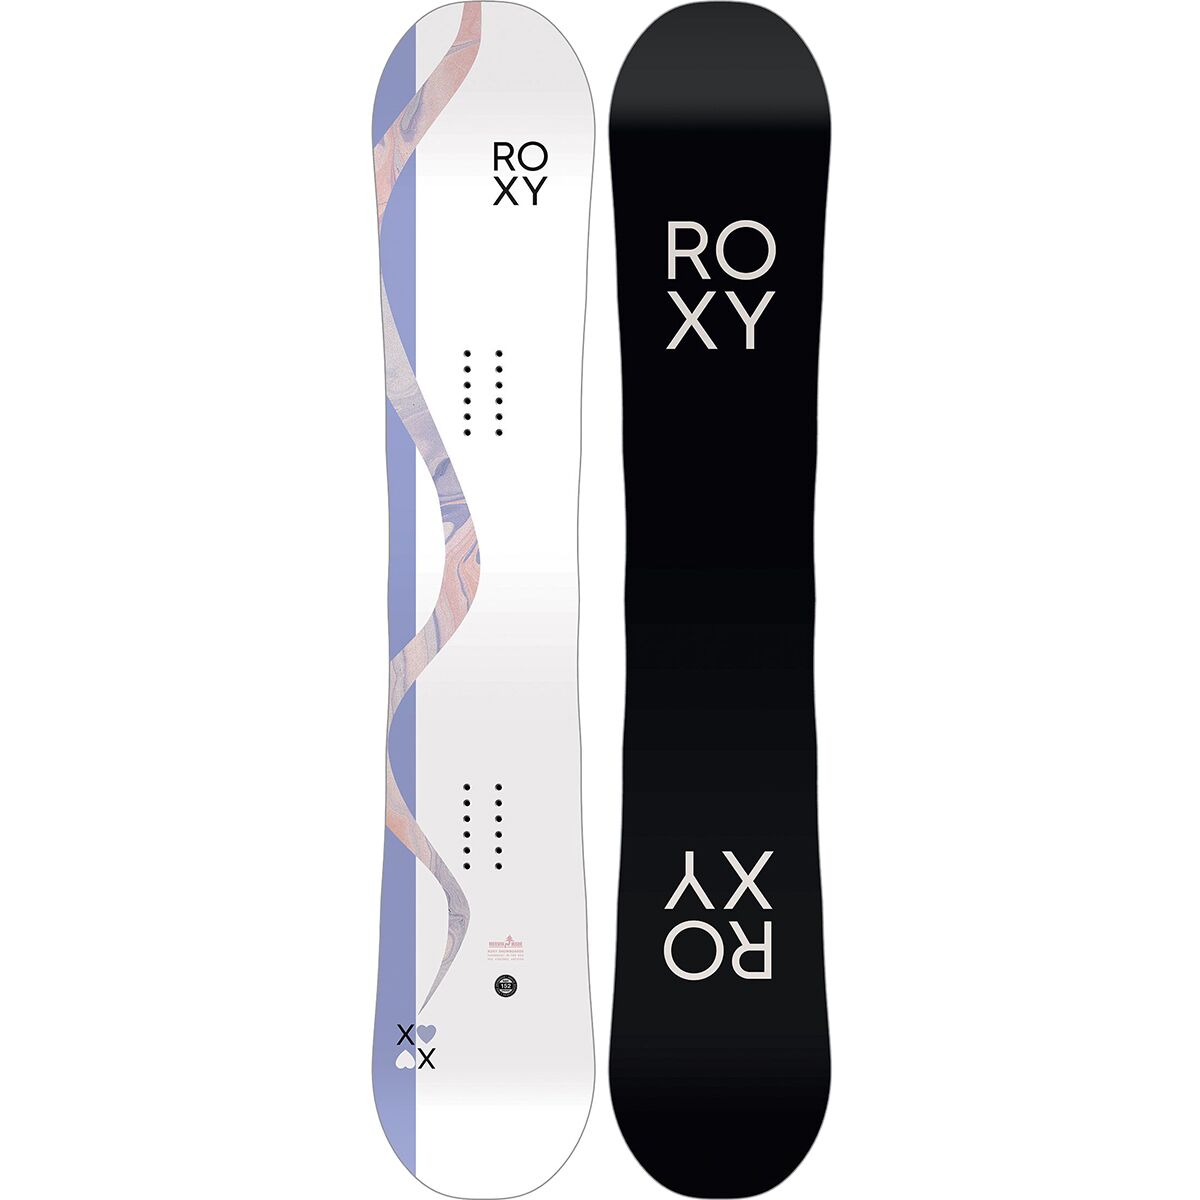 Roxy XOXO Pro Snowboard - 2023 - Women's